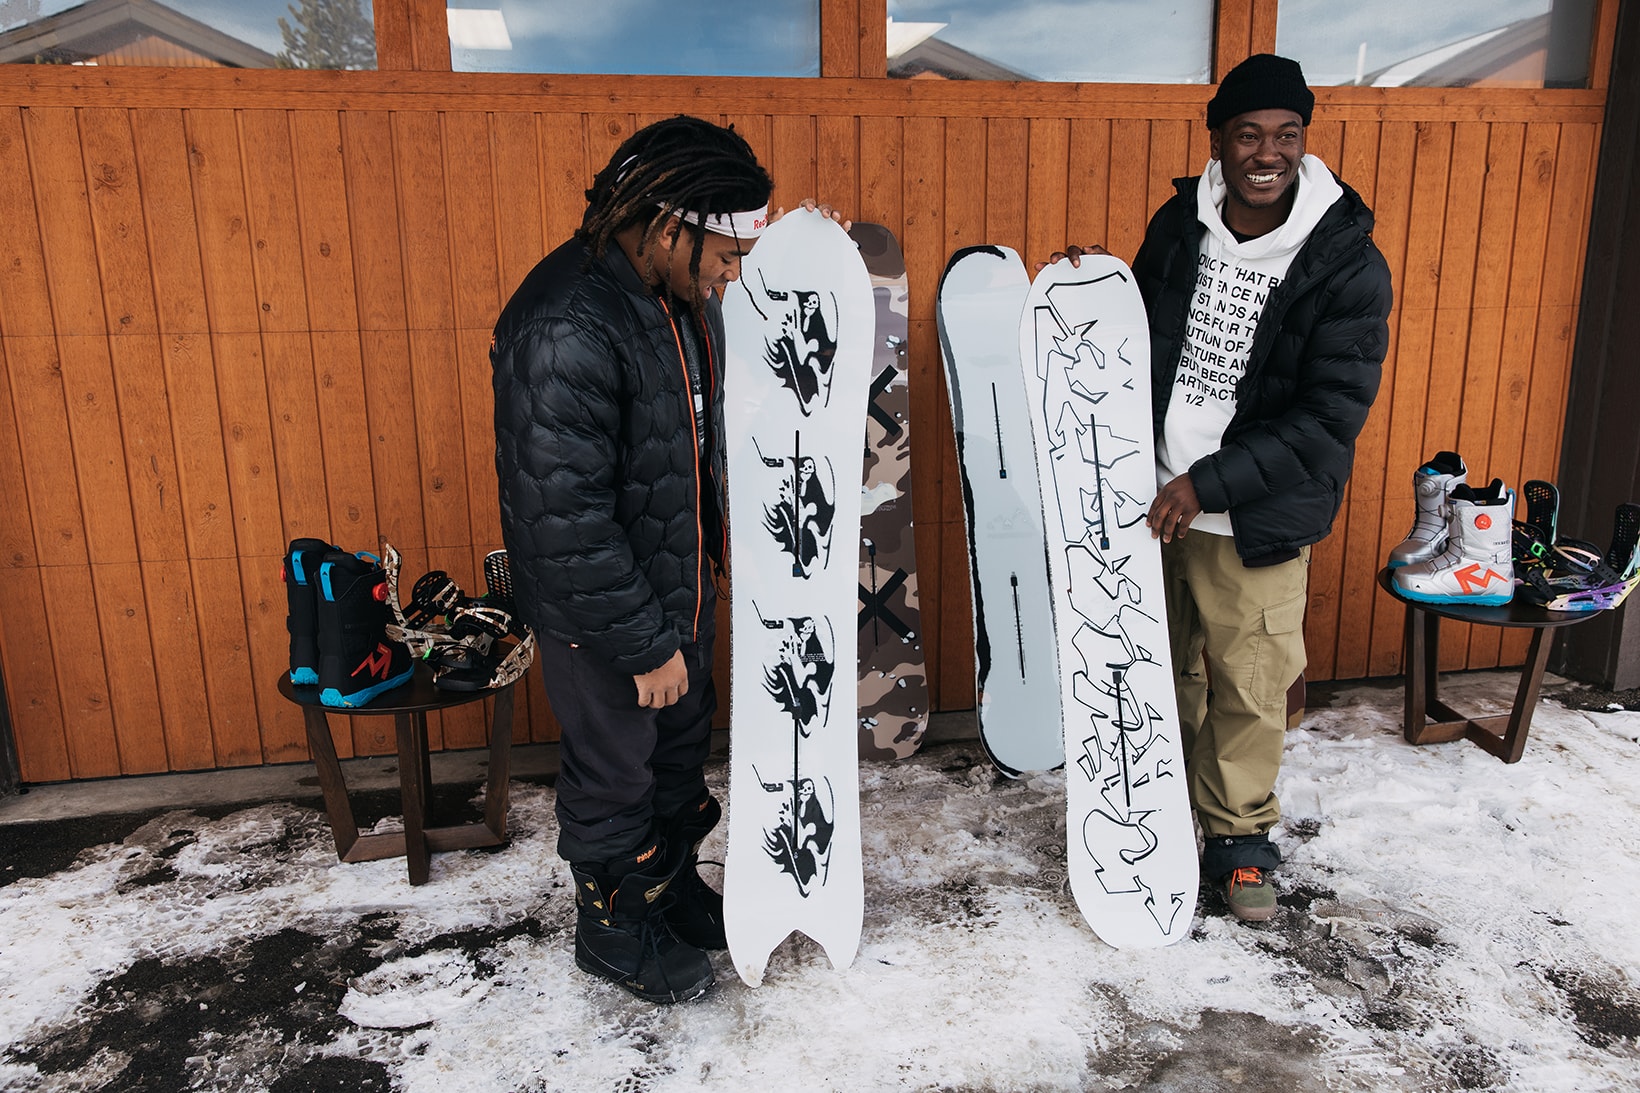 ODLO x Burton Snowboards Launch New Design Collaboration